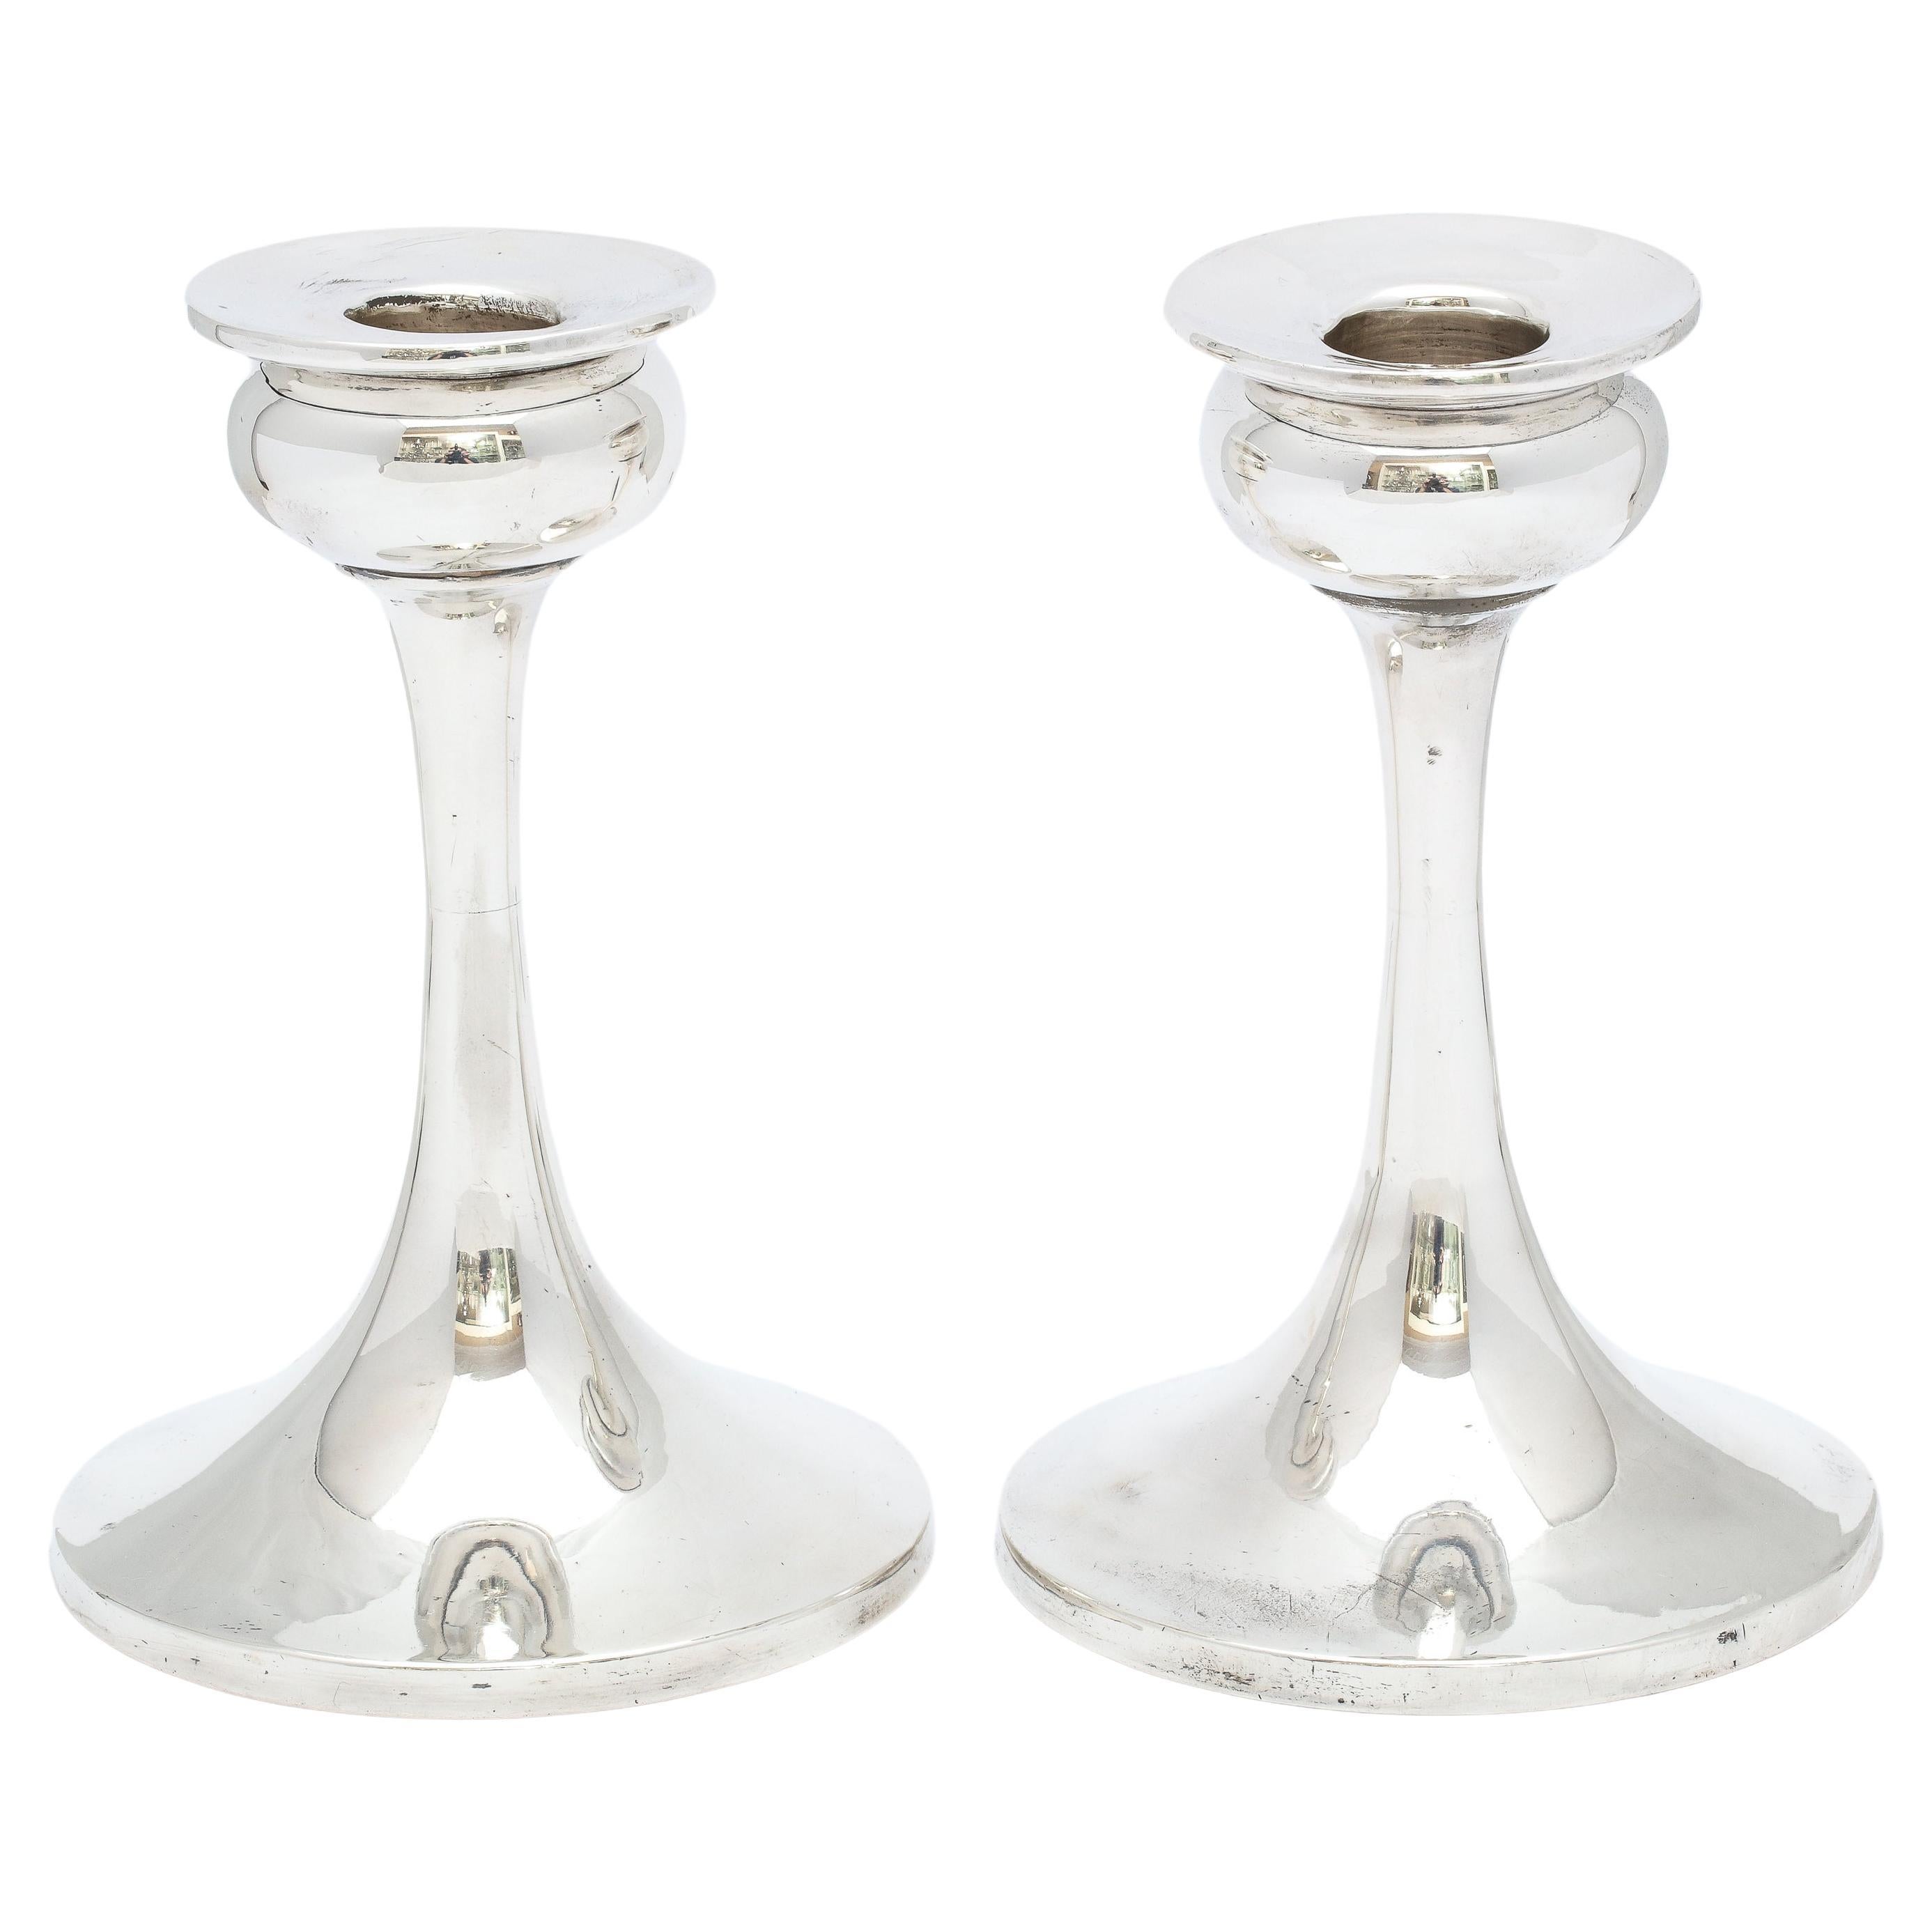 Pair of Art Nouveau Sterling Silver Candlesticks